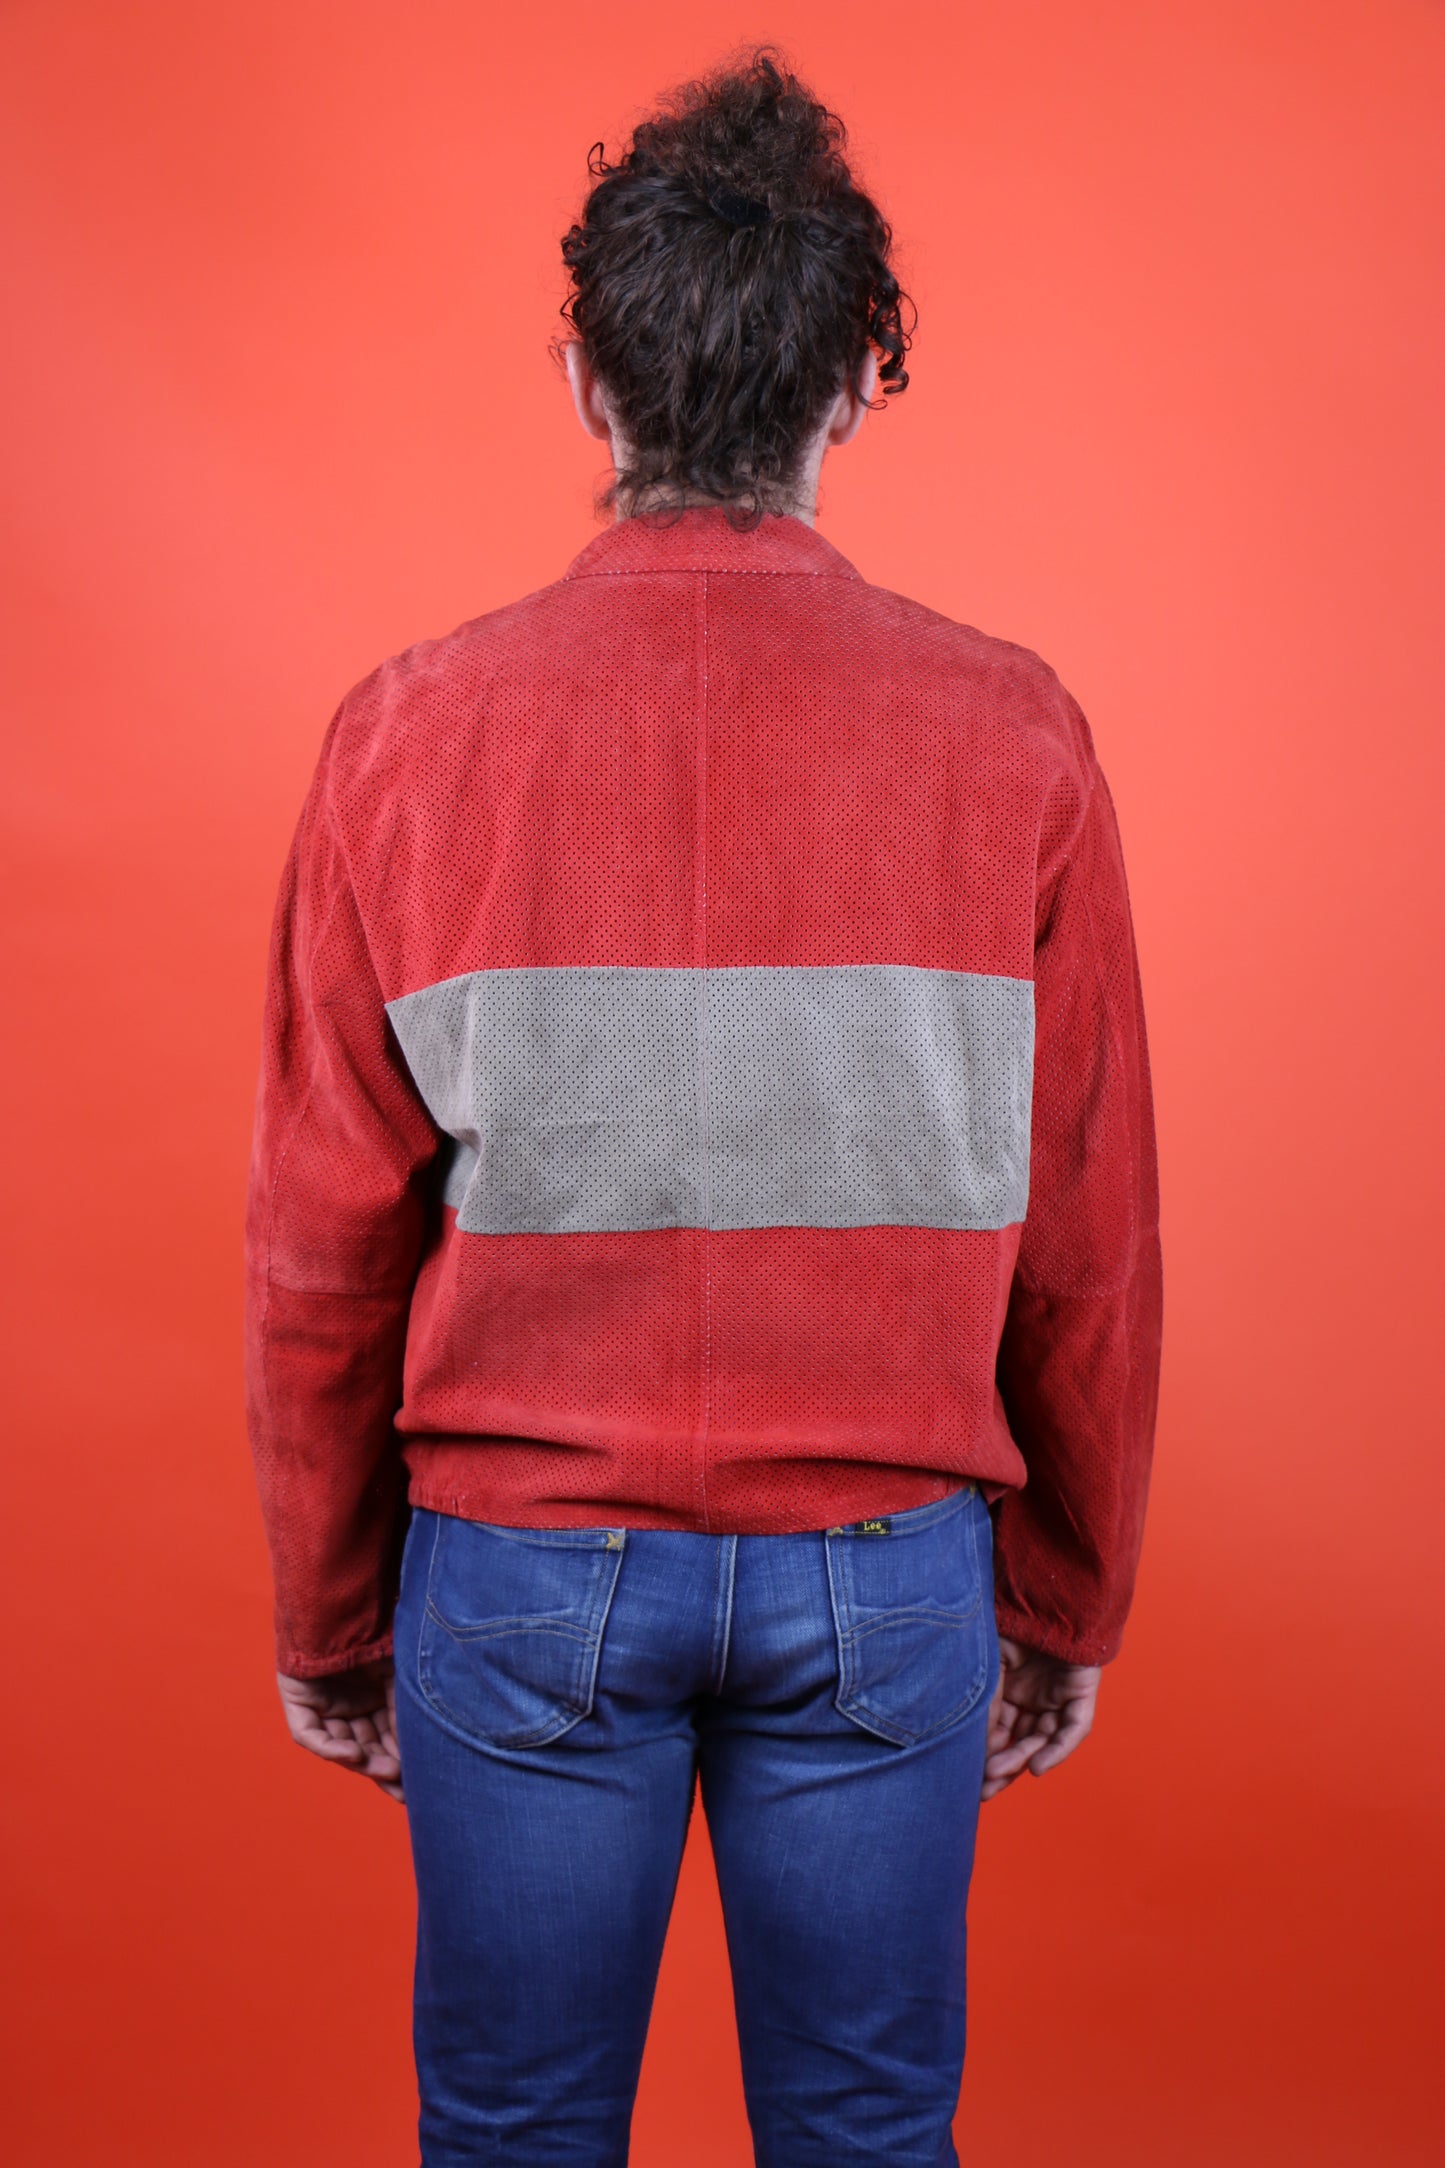 La Matta leather striped jacket - vintage clothing clochard92.com